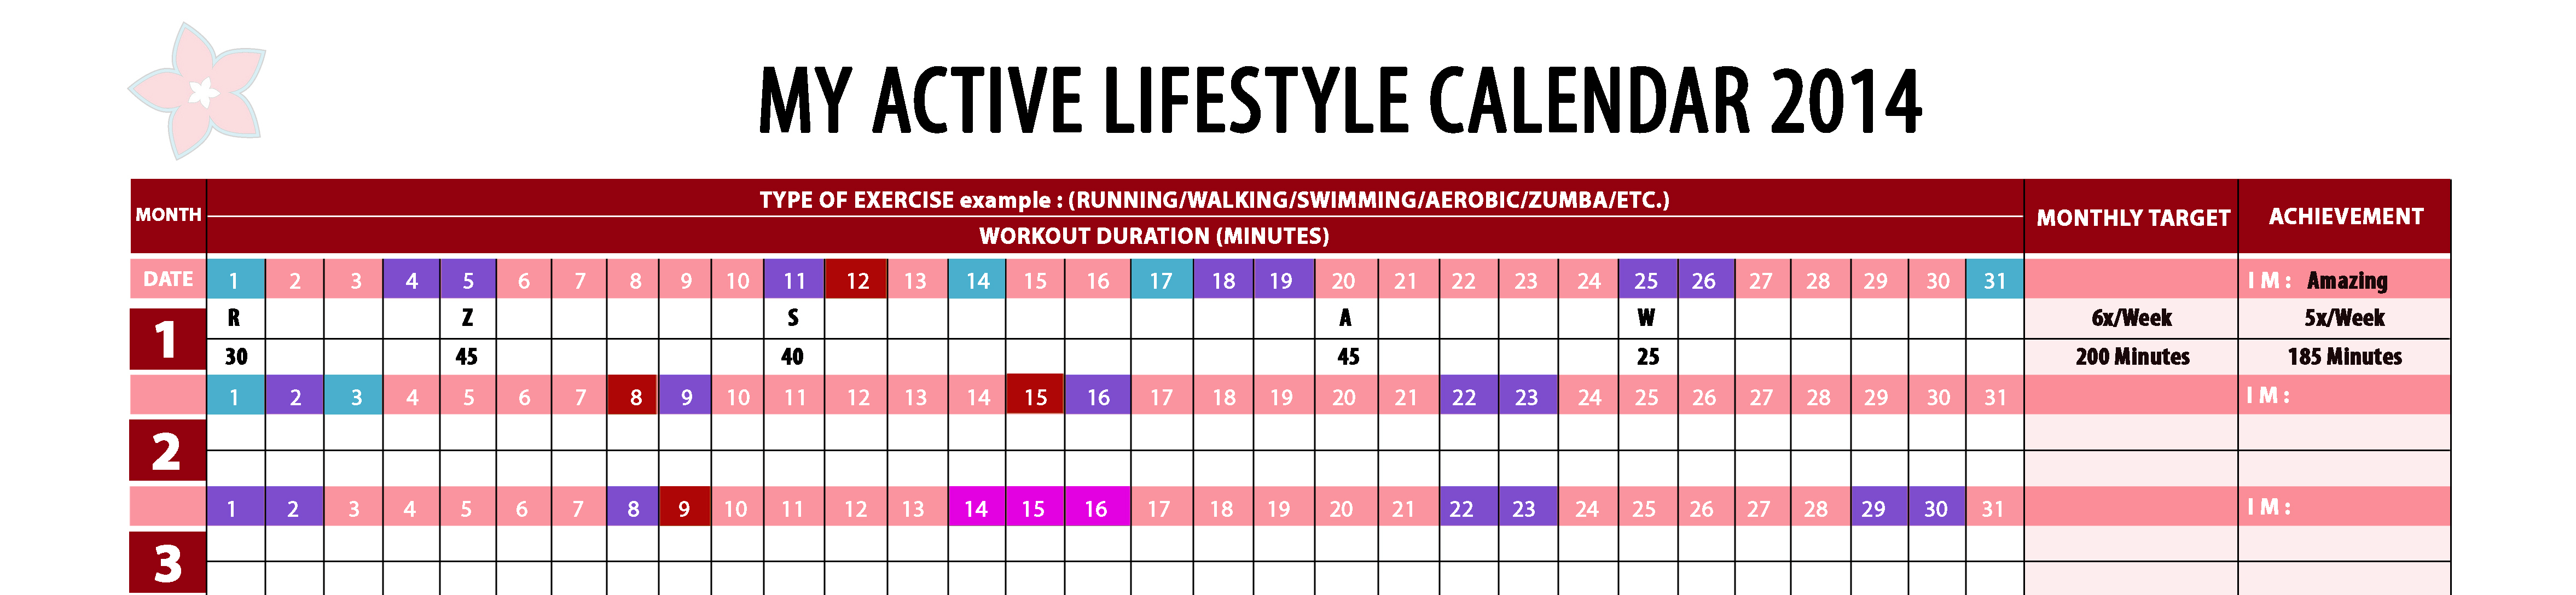 Sporting Calendar 2014